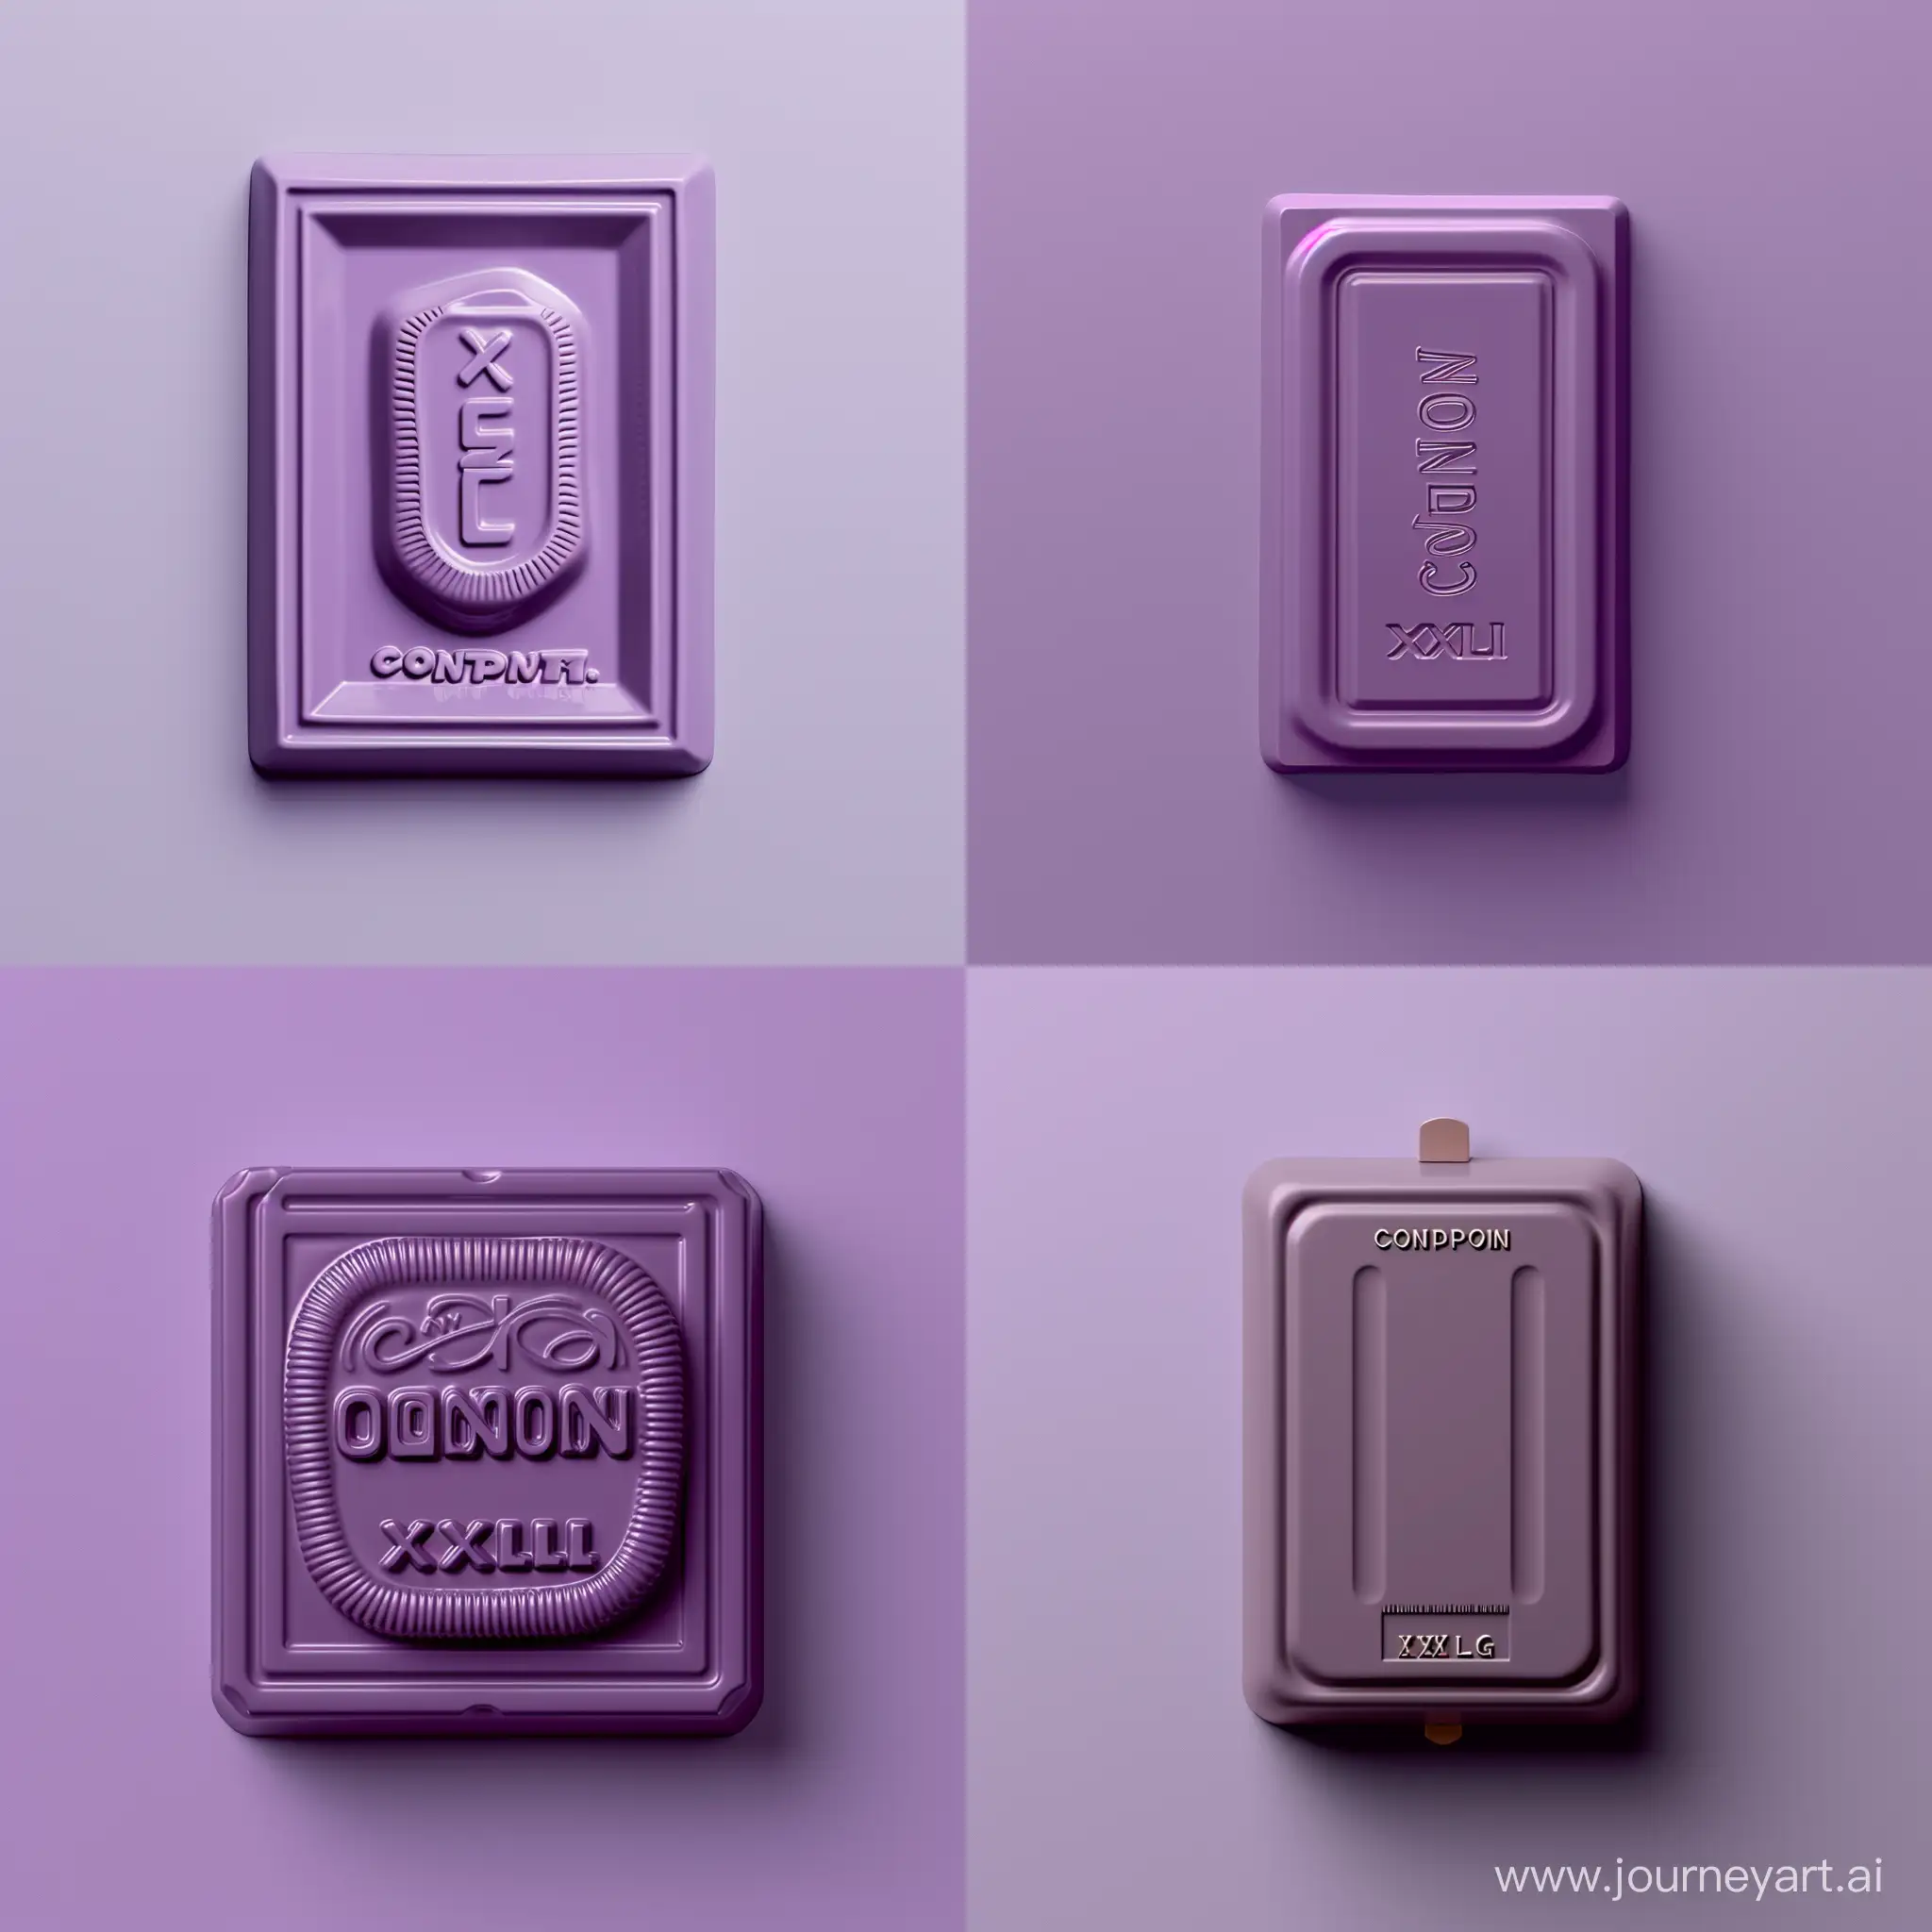 Minimalist-Square-Chocolate-Condom-XXXL-in-Shades-of-Purple